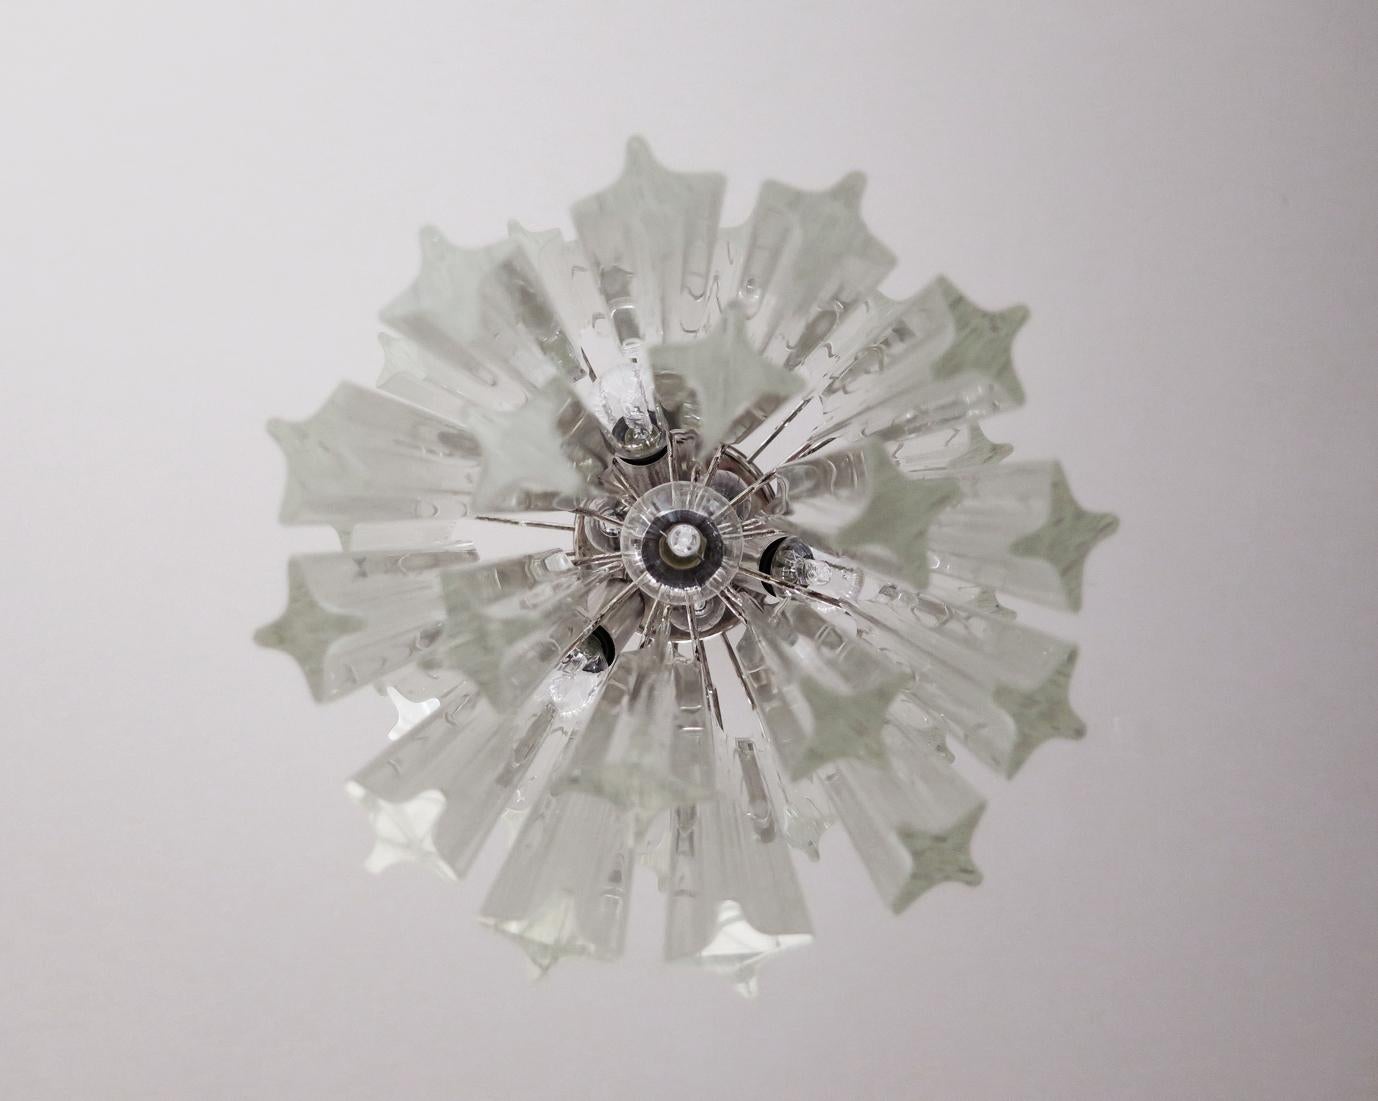 Italian Murano quadriedri chandelier - 46 trasparent prism